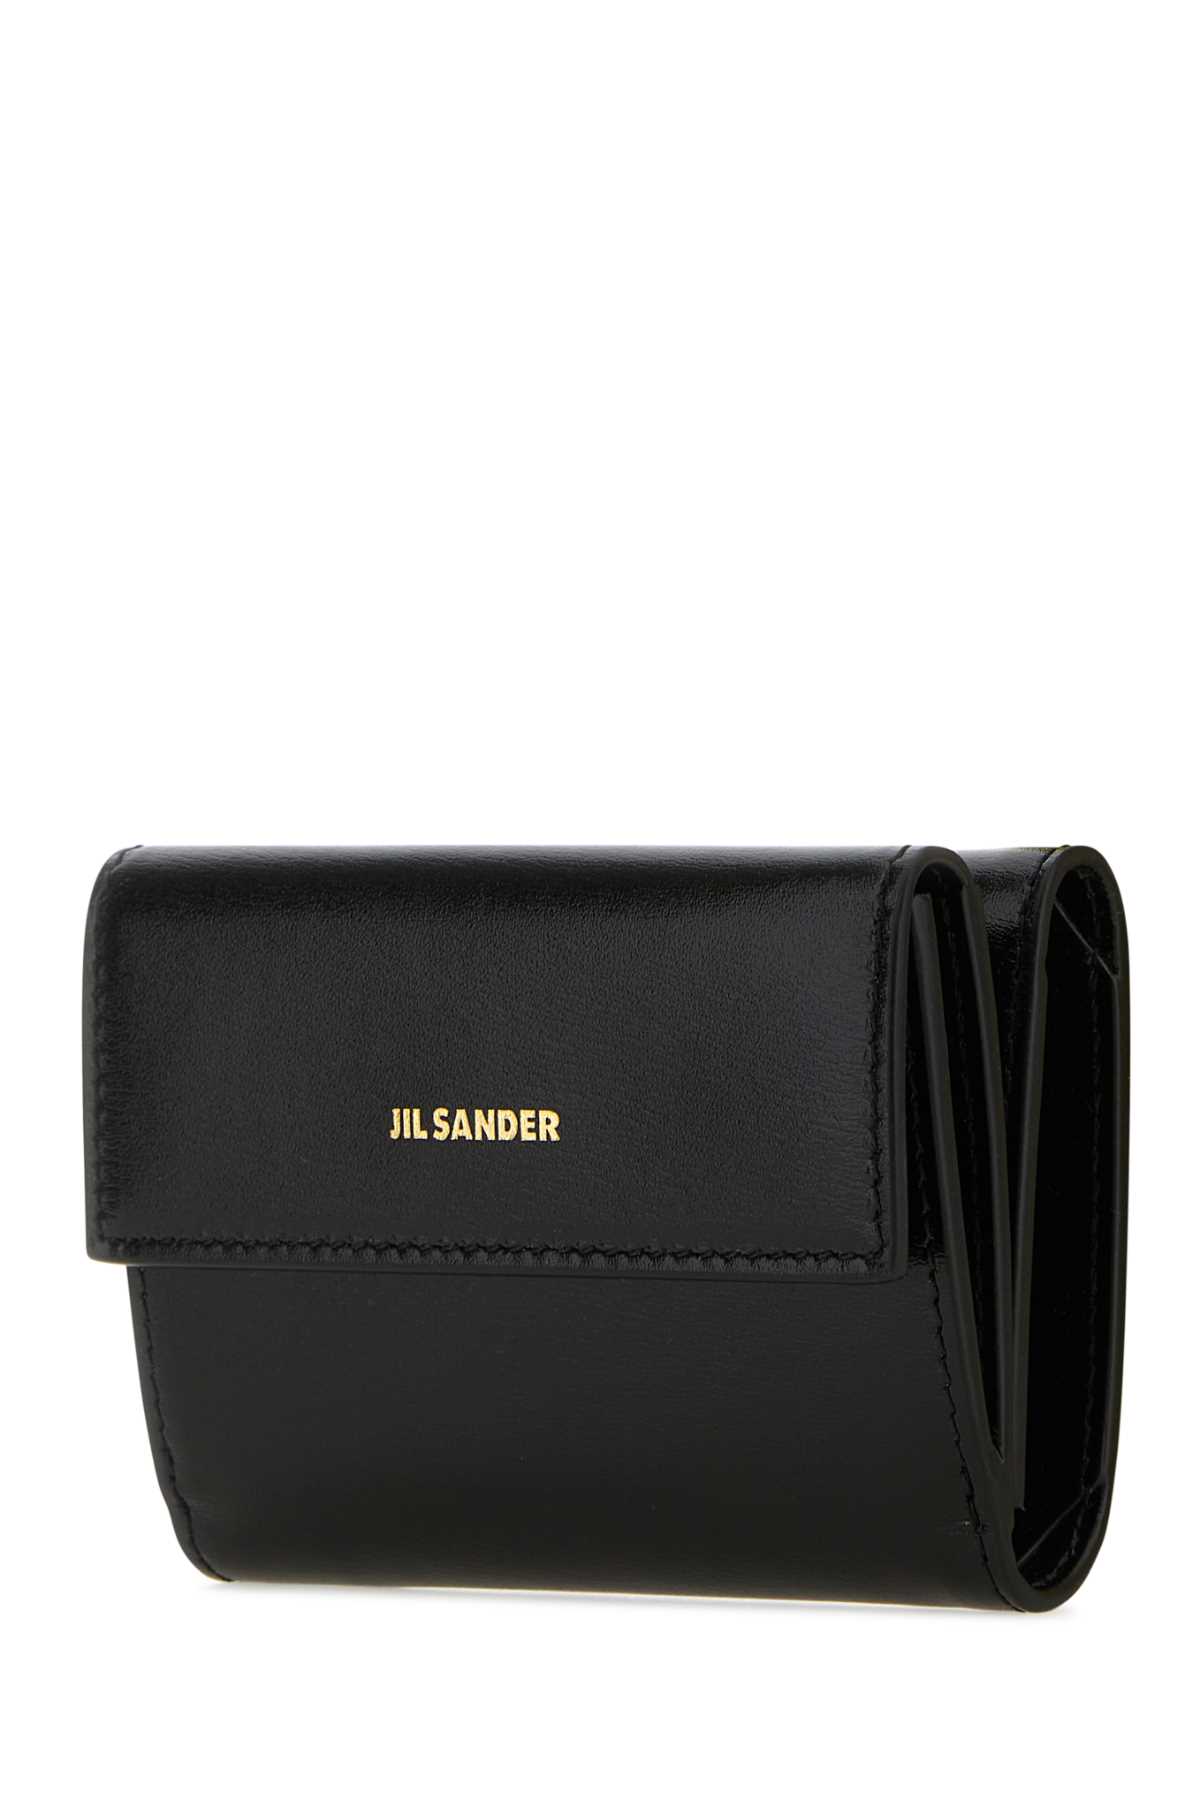 Jil Sander Black Leather Wallet In 001